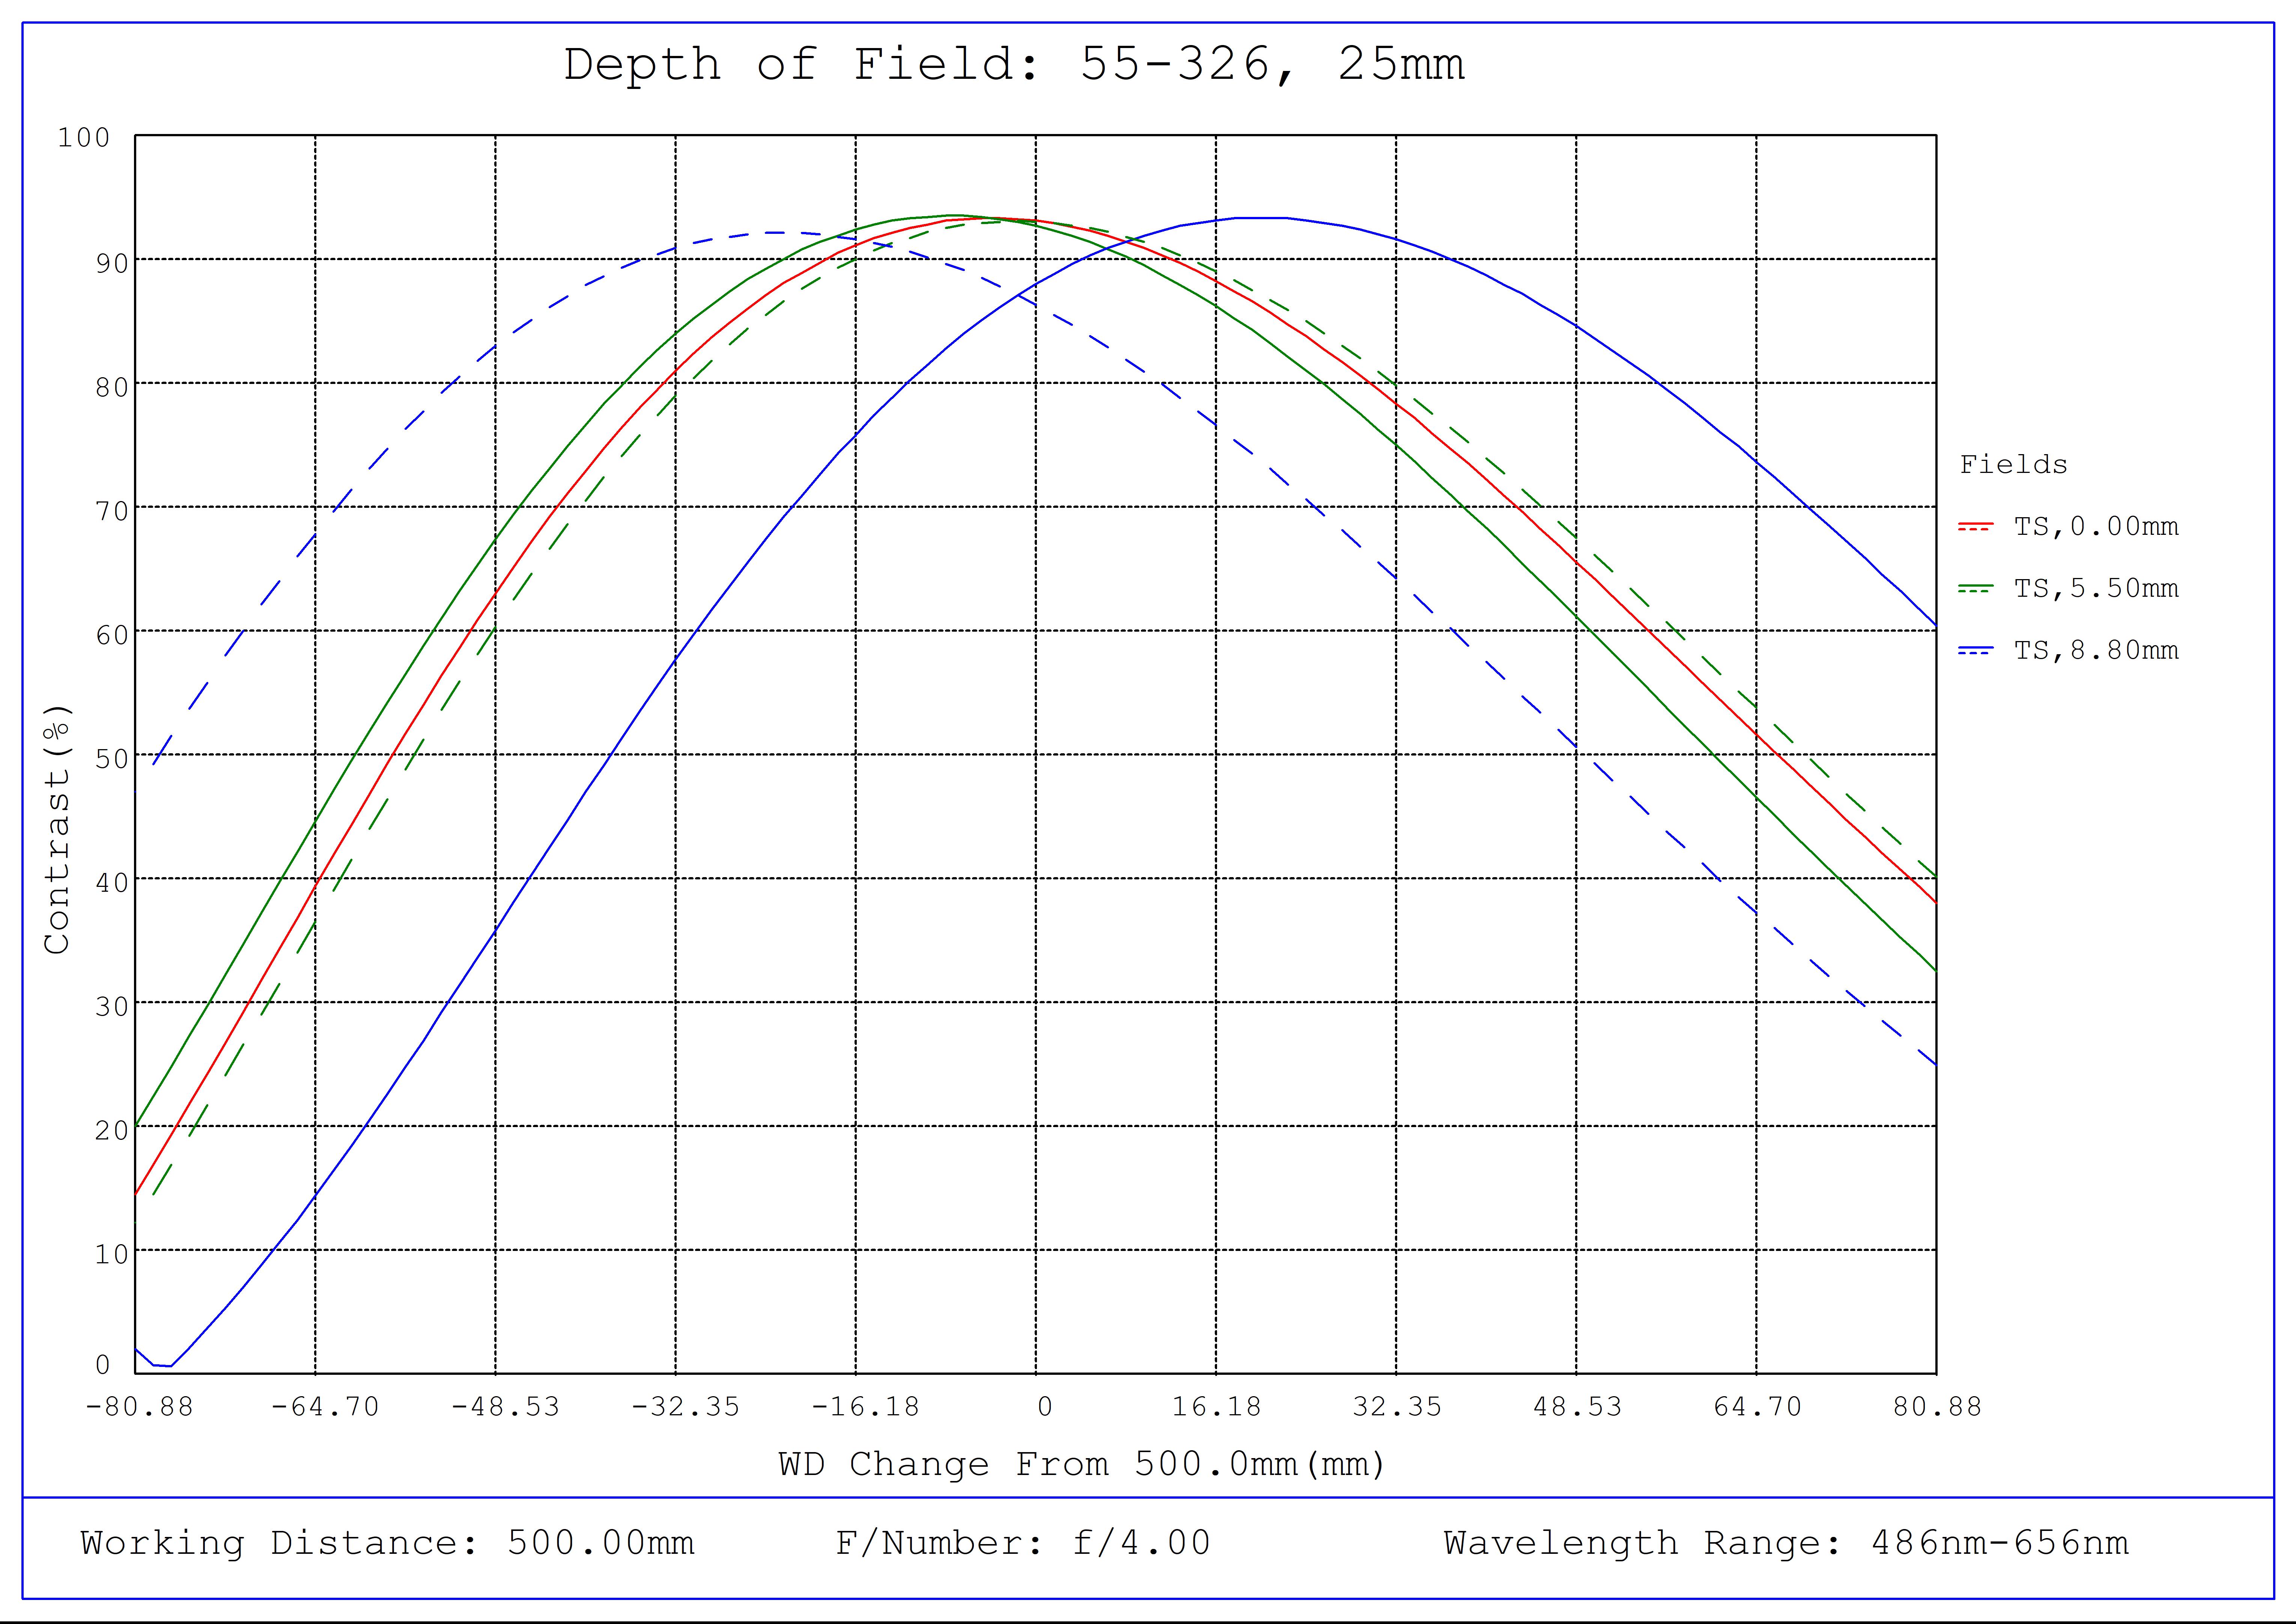 #55-326, 25mm DG Series Fixed Focal Length Lens, Depth of Field Plot, 500mm Working Distance, f4